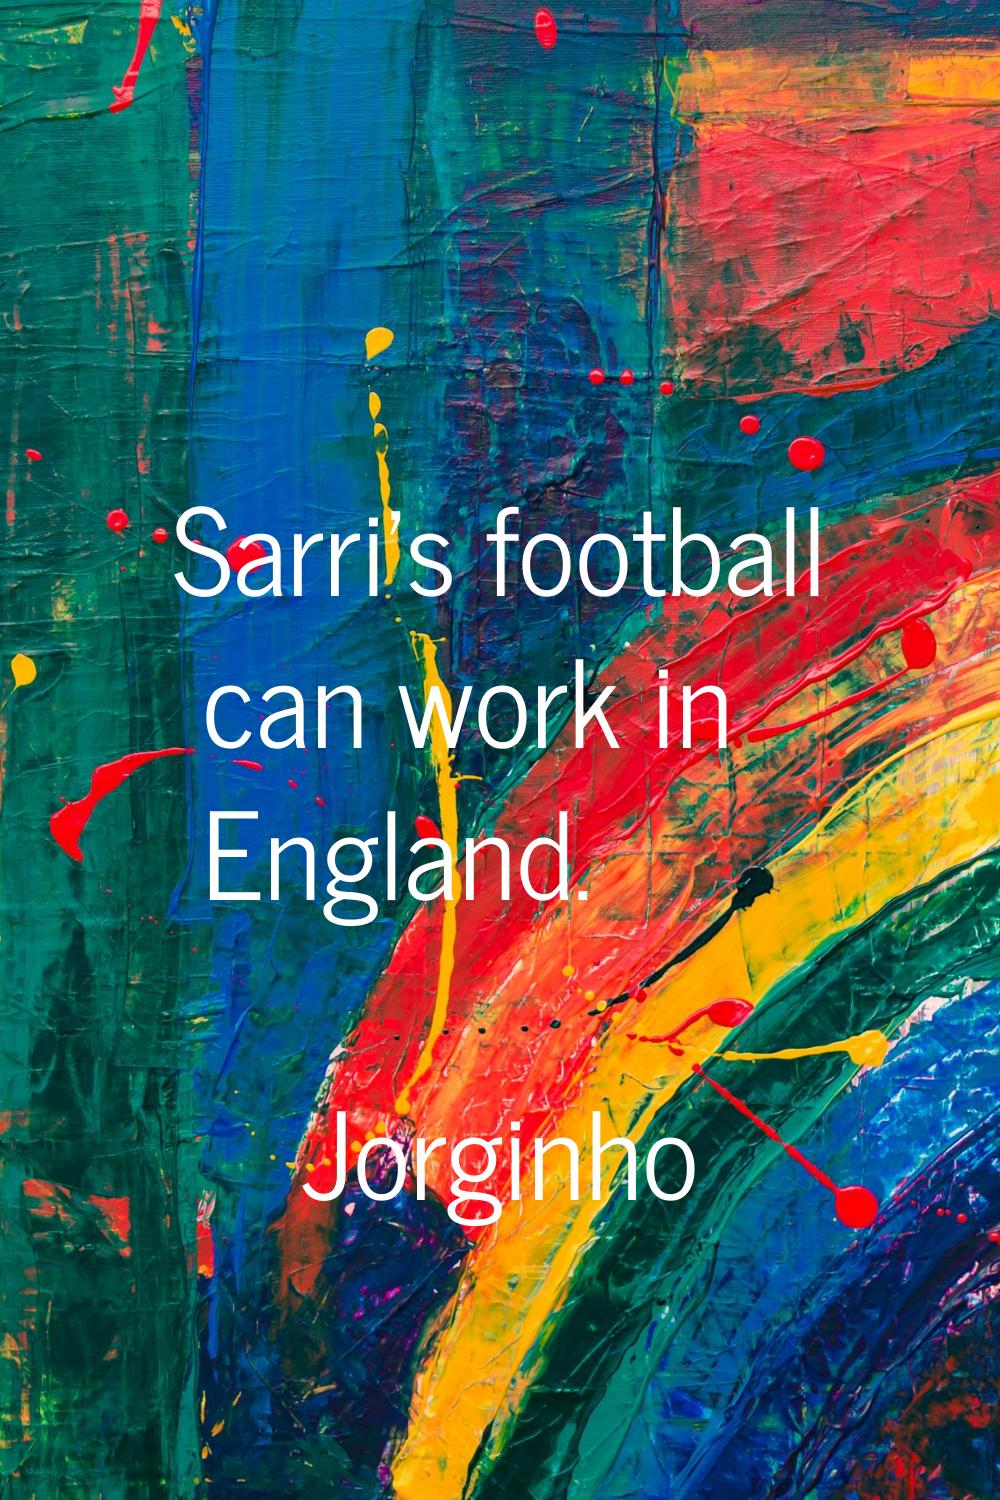 Sarri's football can work in England.